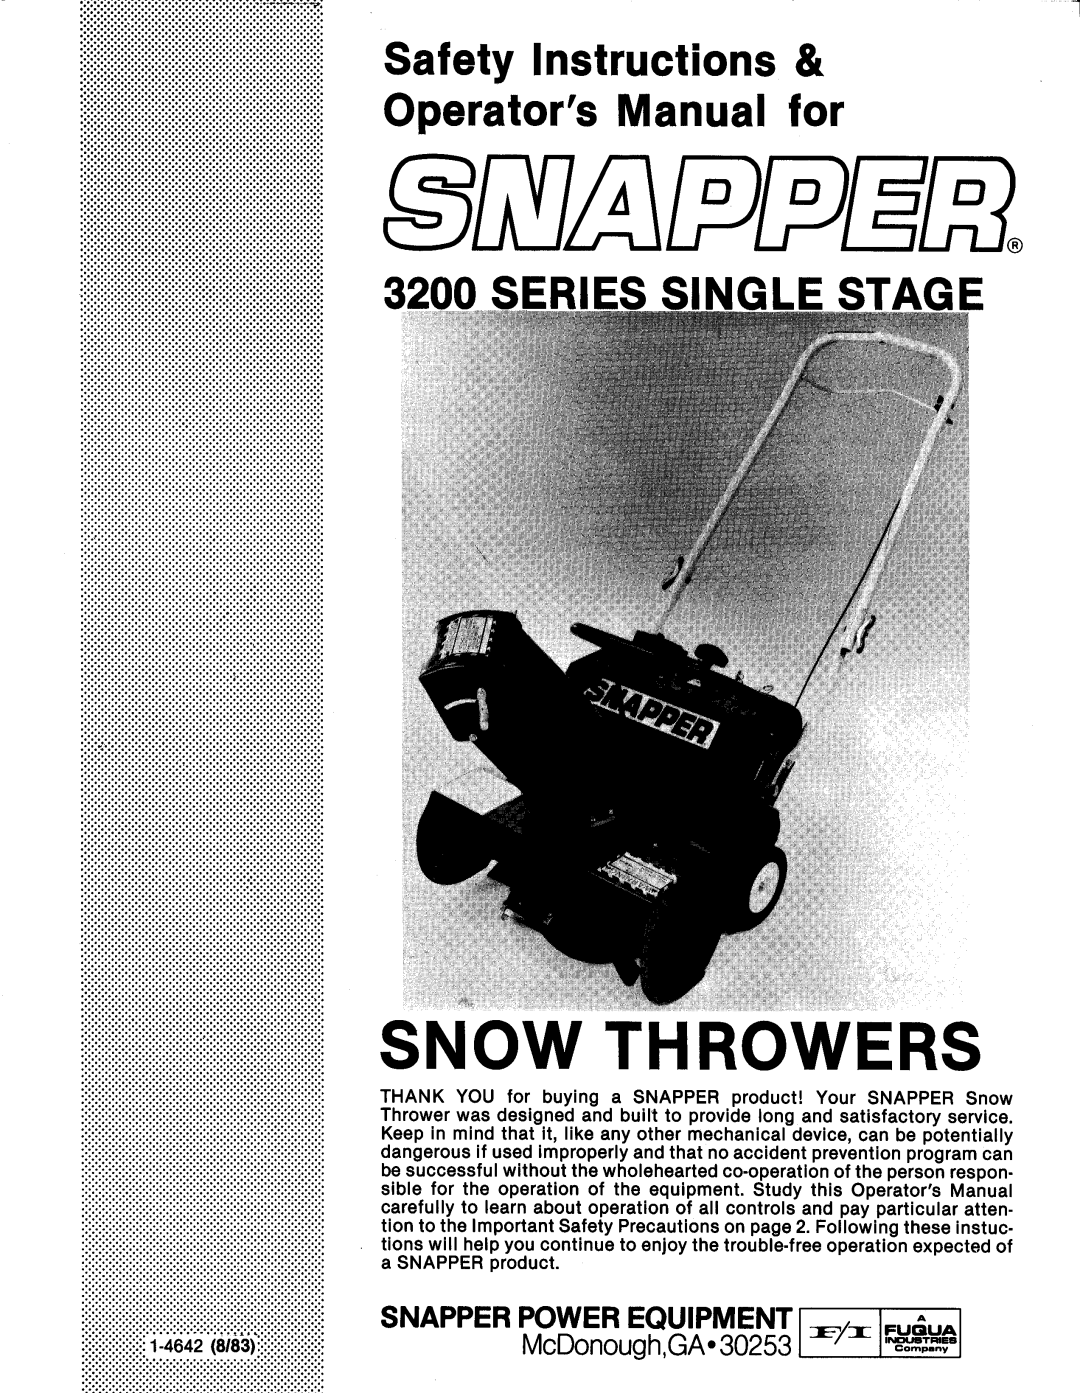 Snapper 3200 Series manual 